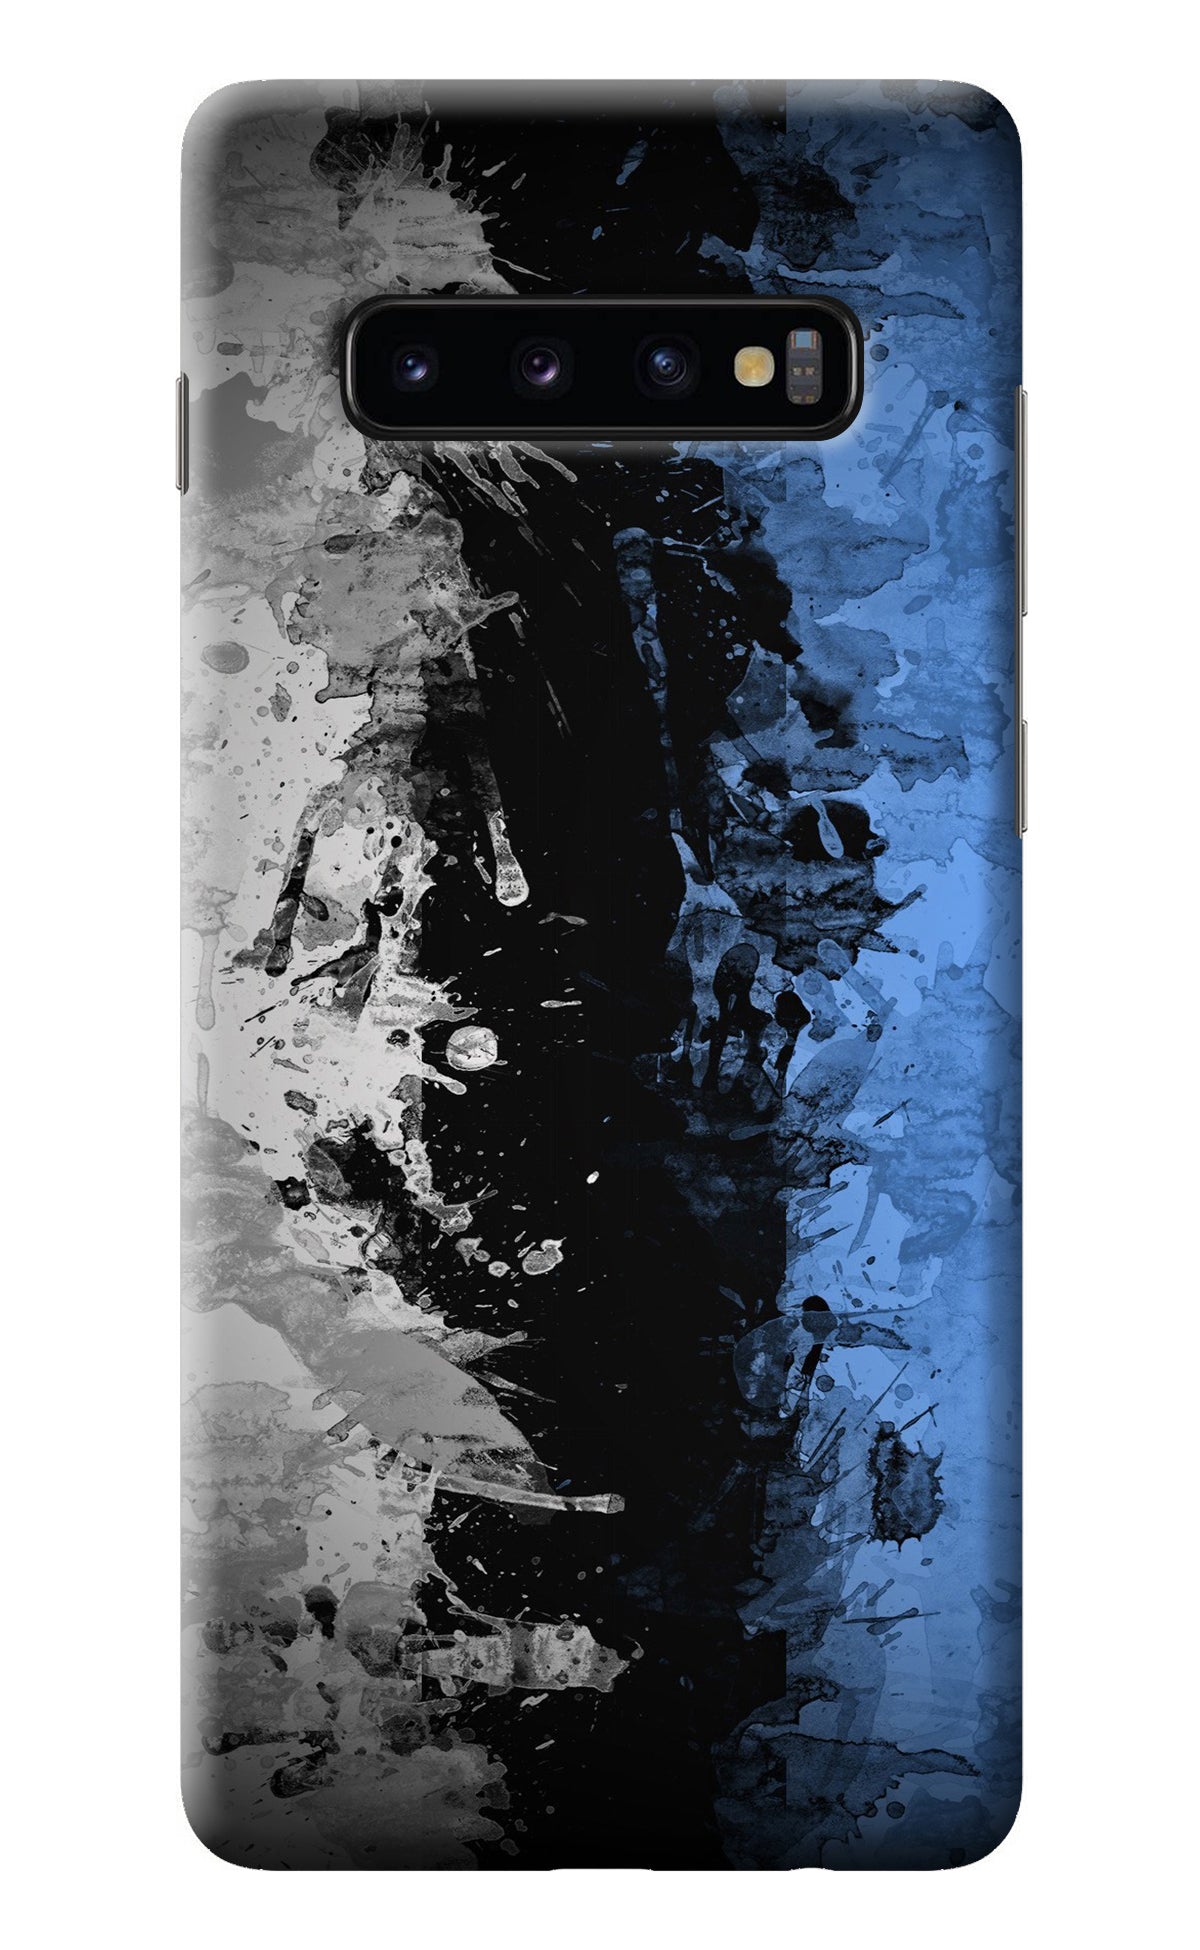 Artistic Design Samsung S10 Plus Back Cover